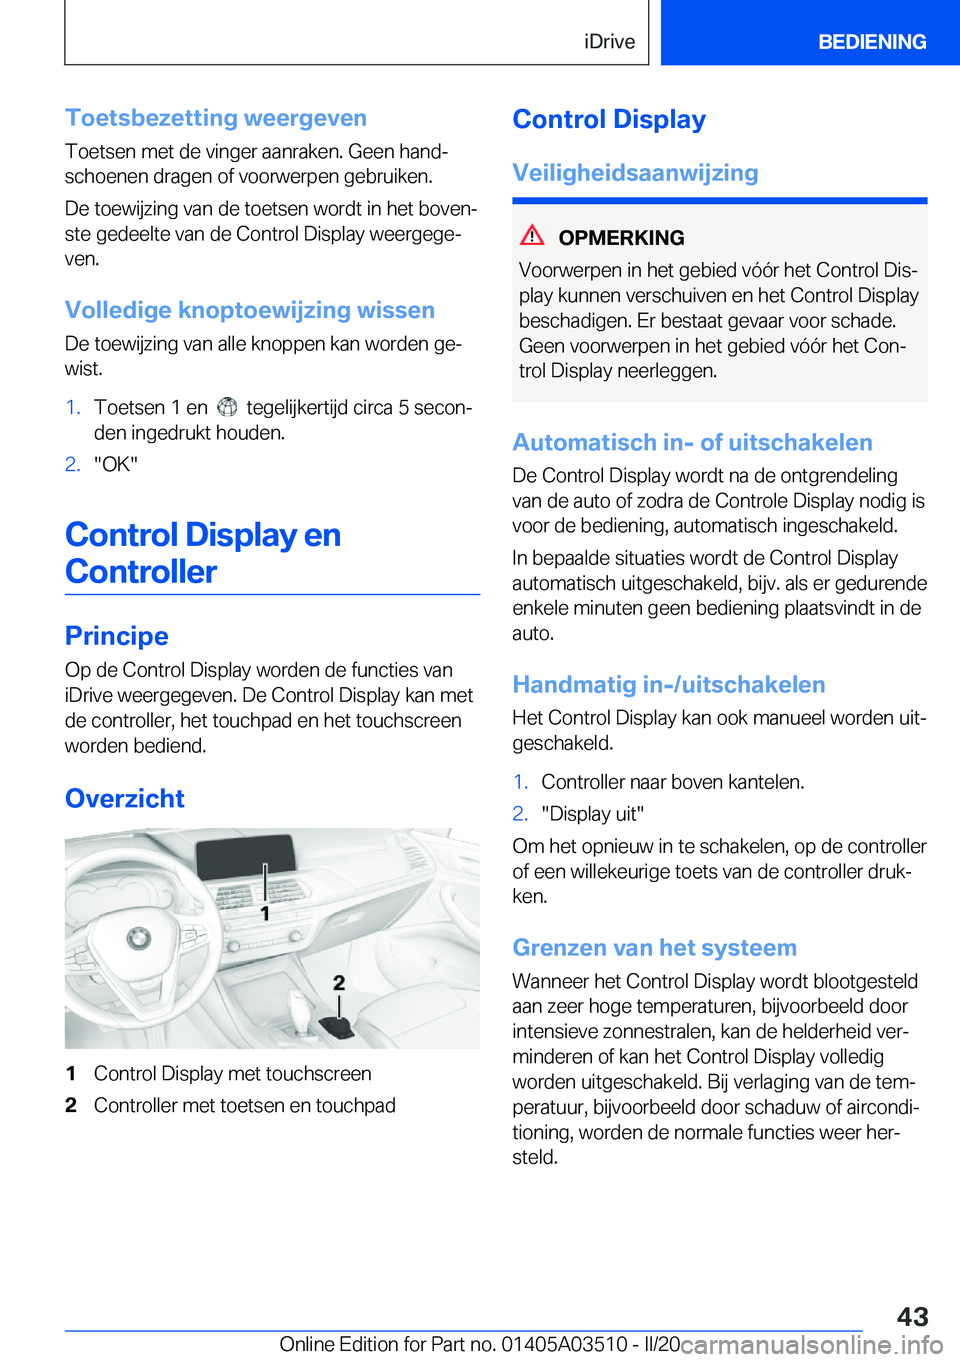 BMW X3 2020  Instructieboekjes (in Dutch) �T�o�e�t�s�b�e�z�e�t�t�i�n�g��w�e�e�r�g�e�v�e�n�T�o�e�t�s�e�n��m�e�t��d�e��v�i�n�g�e�r��a�a�n�r�a�k�e�n�.��G�e�e�n��h�a�n�dj�s�c�h�o�e�n�e�n��d�r�a�g�e�n��o�f��v�o�o�r�w�e�r�p�e�n��g�e�b�r